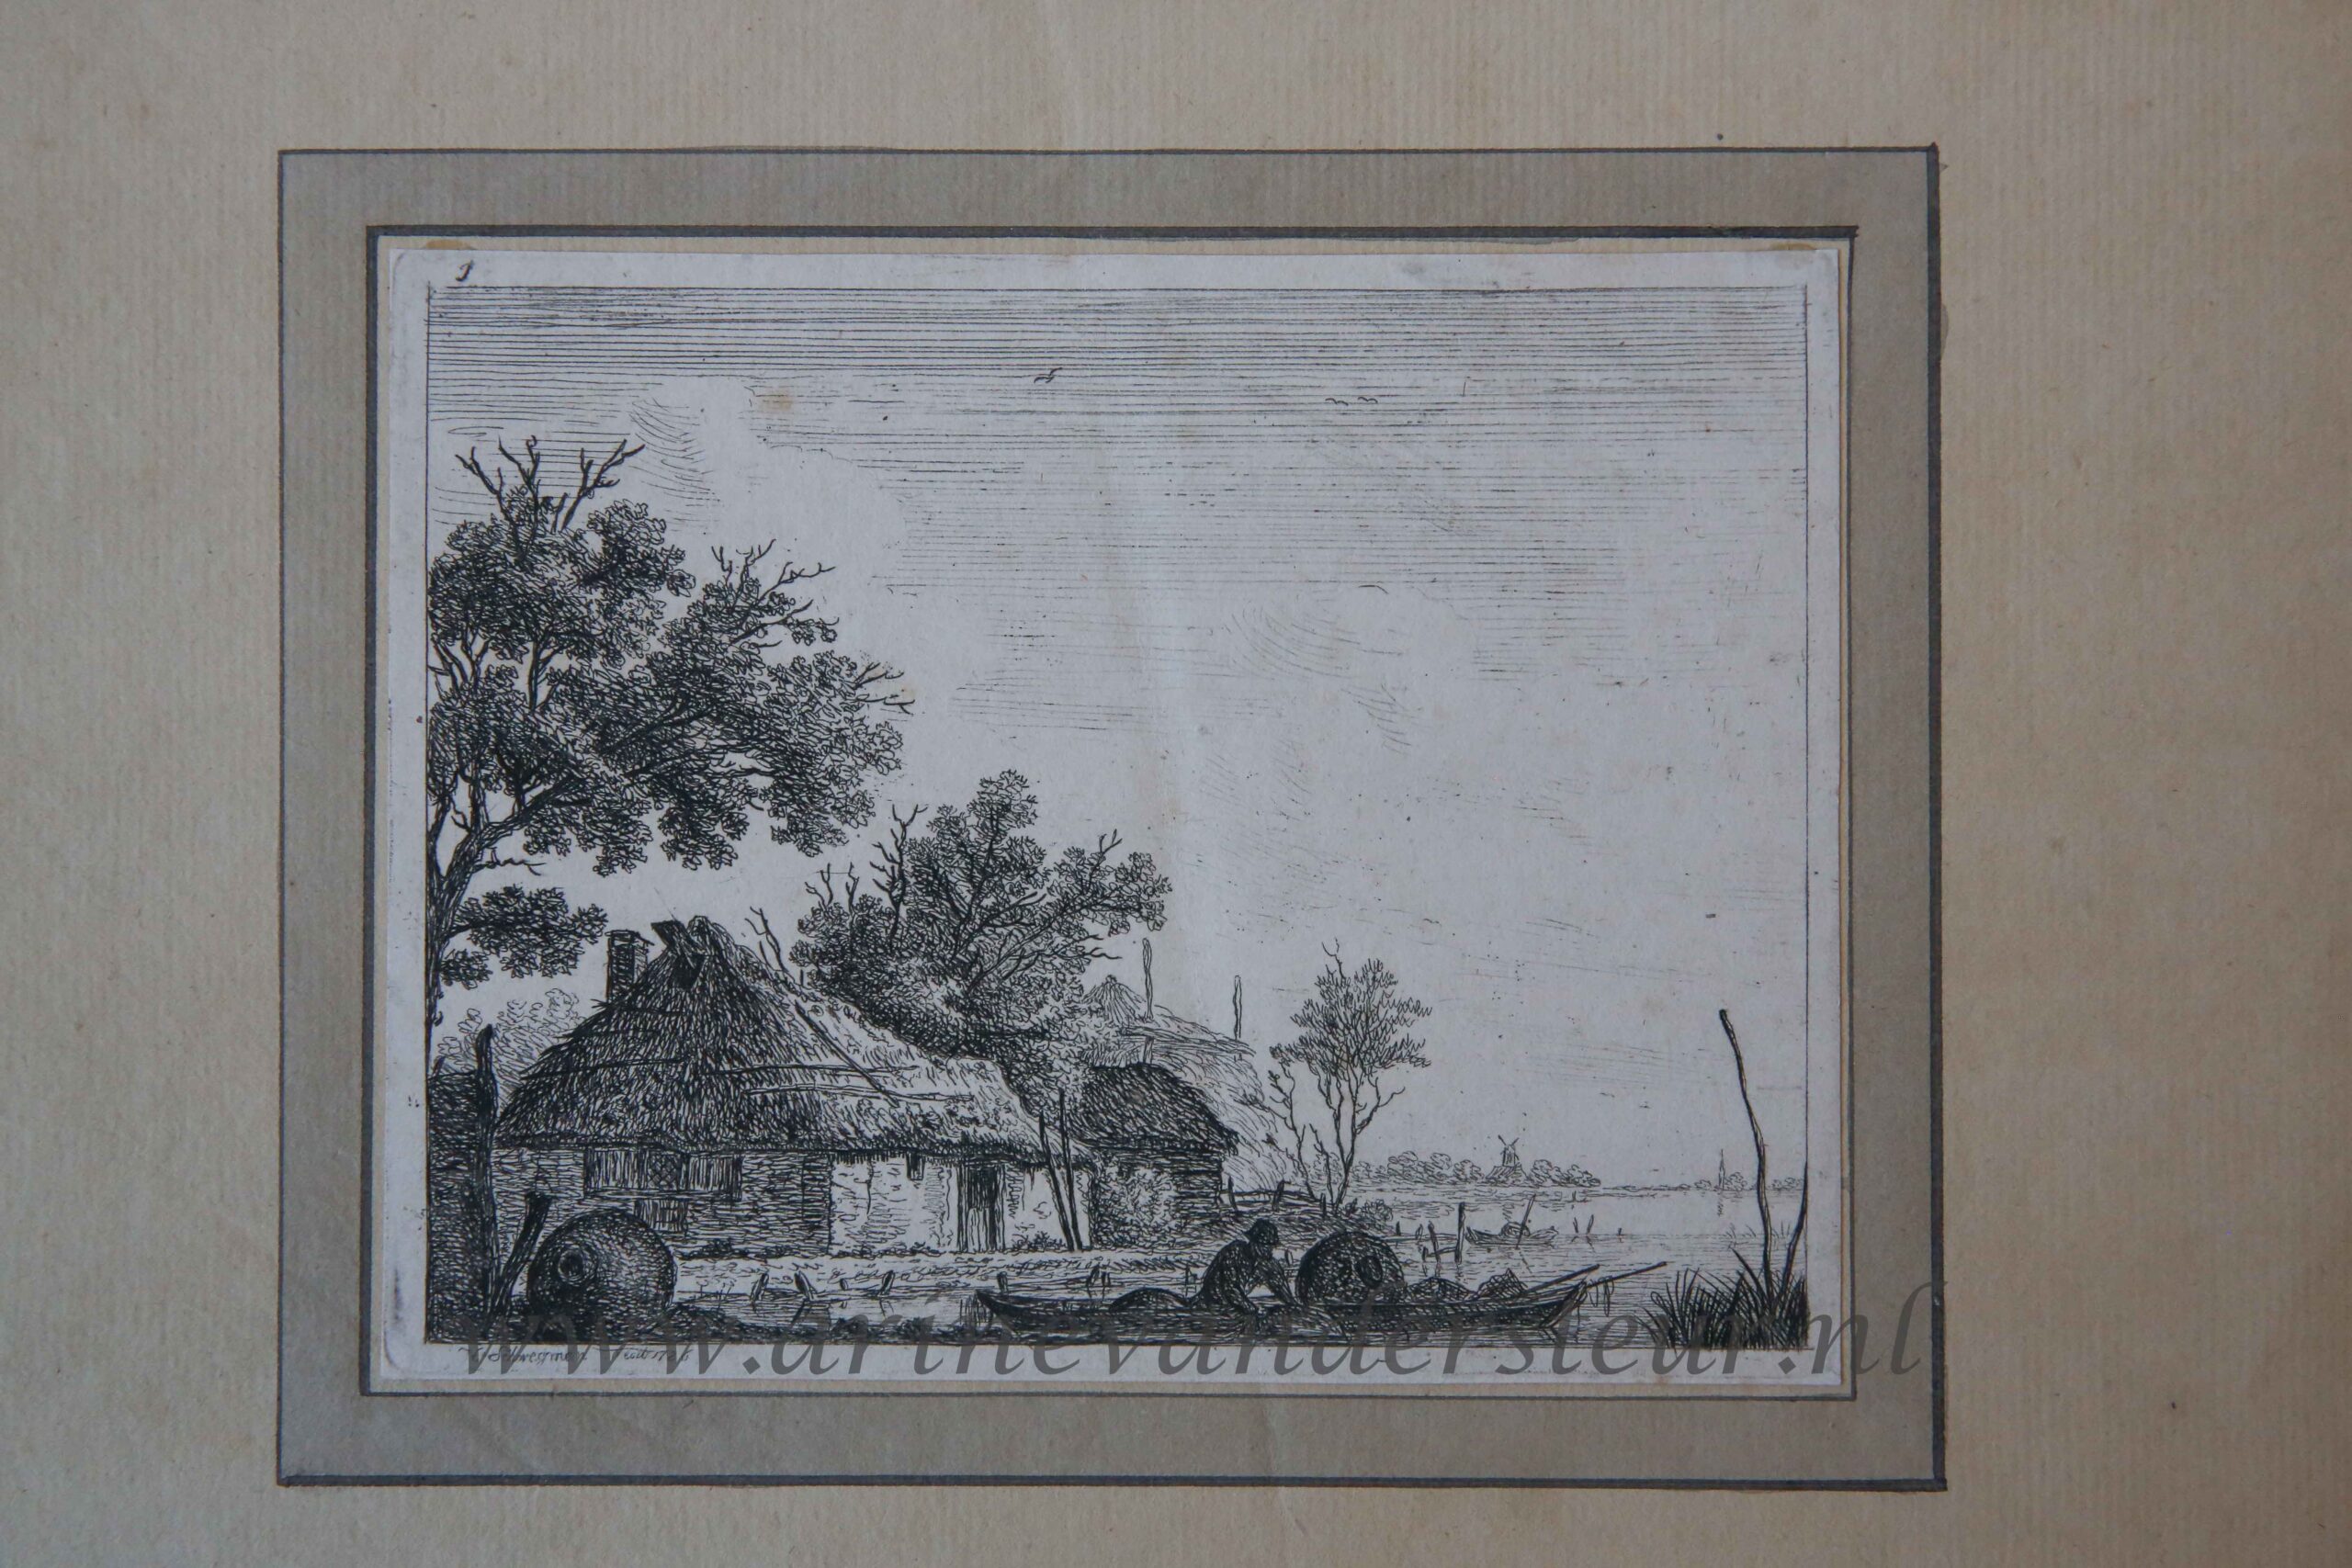 Schwegman, Hendrik (1761-1816) - [Antique print, etching] Farm house on a lake/Boerderij bij meer.